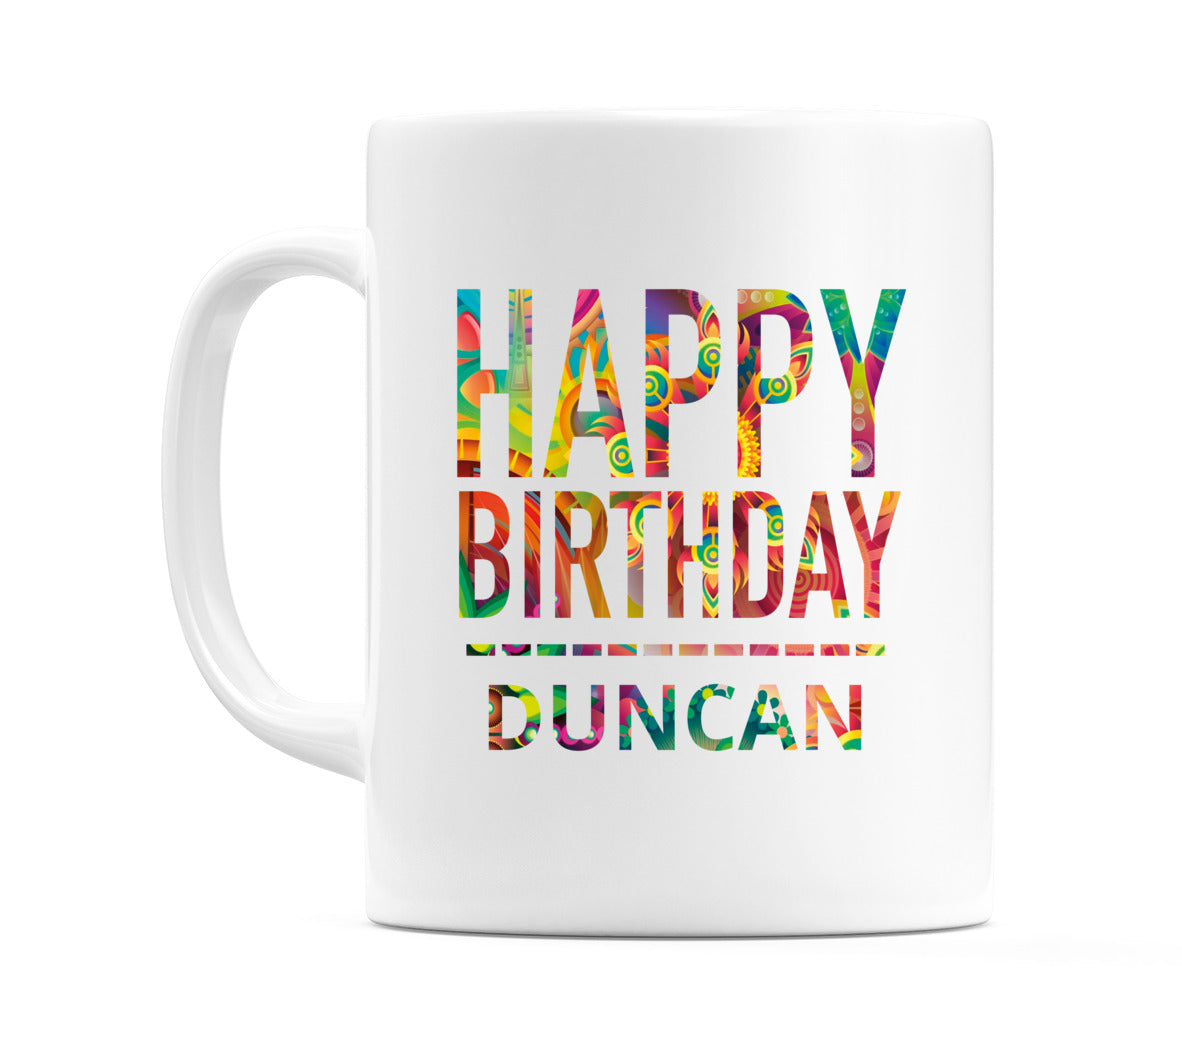 Happy Birthday Duncan (Tie Dye Effect) Mug Cup by WeDoMugs